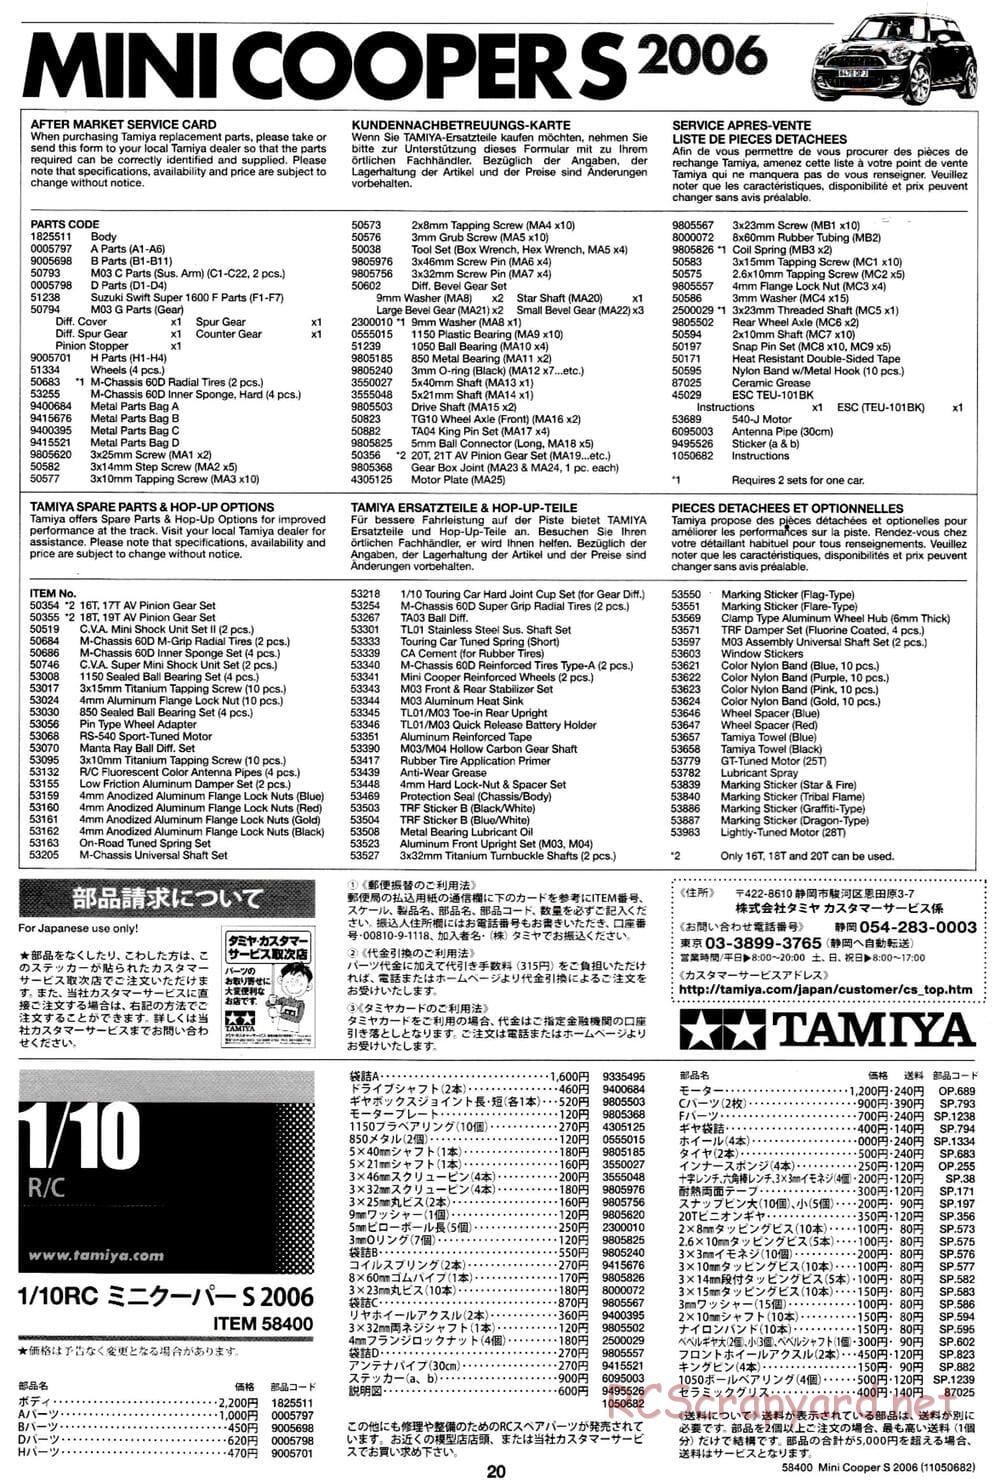 Tamiya - Mini Cooper S 2006 - M03L Chassis - Manual - Page 20